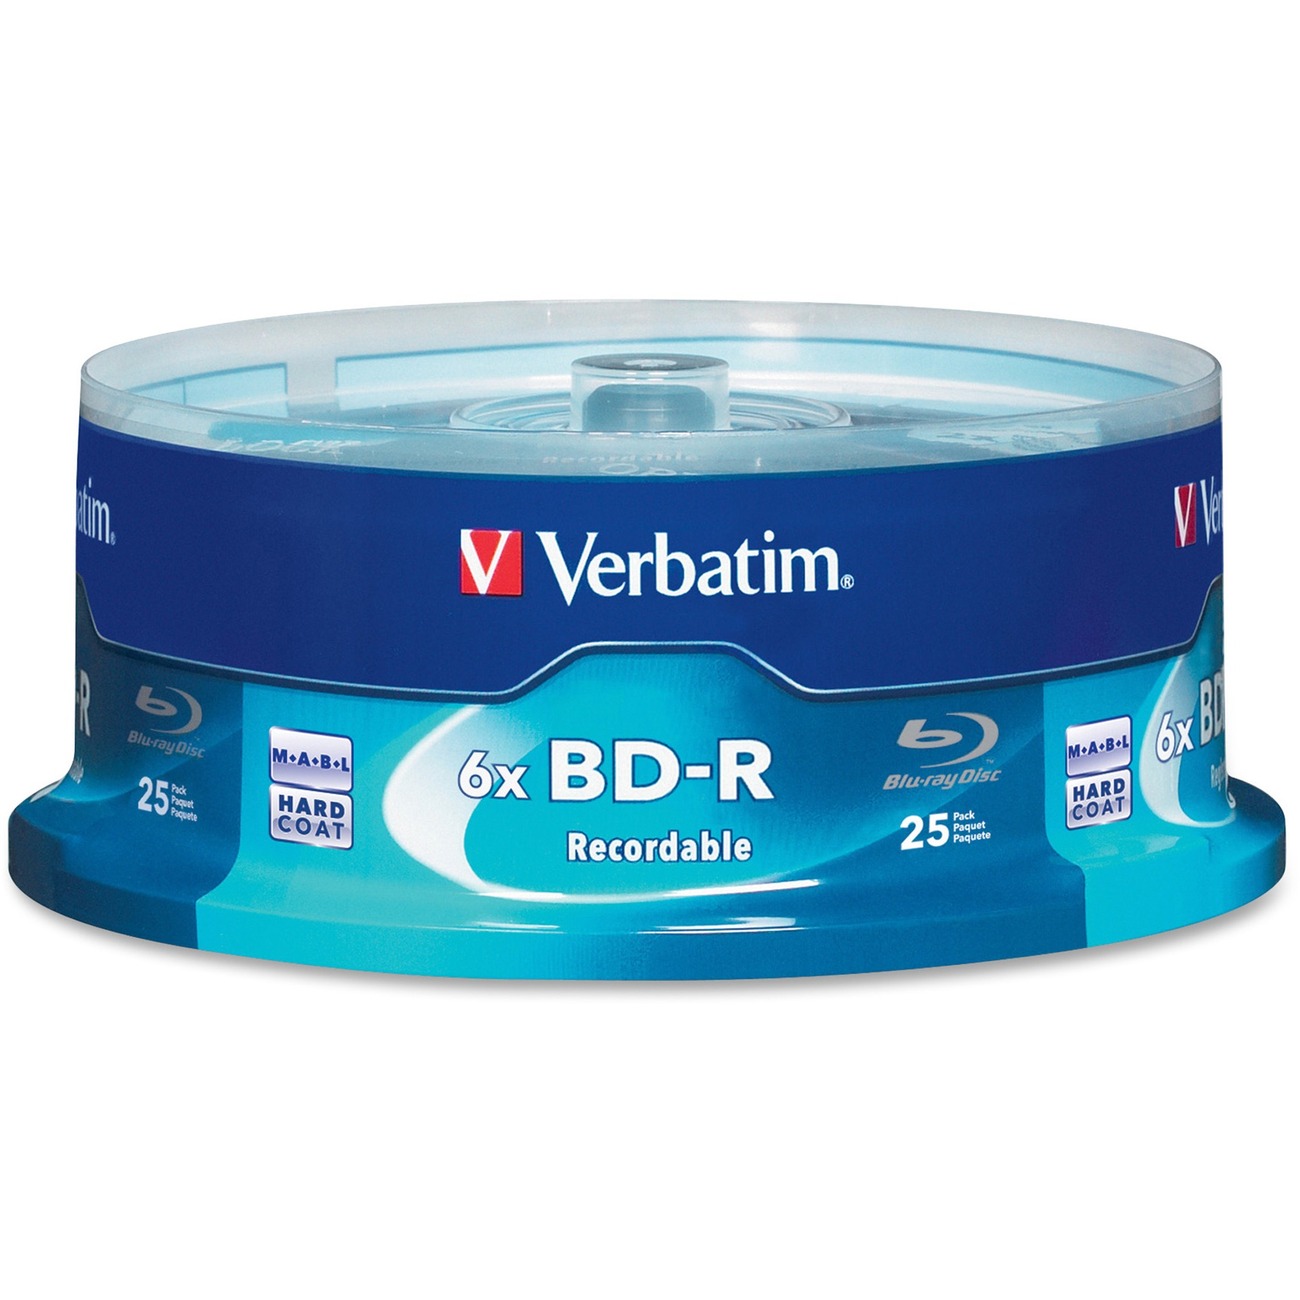 Verbatim BD-R SL 25 Go vitesse 6x imprimable (par 50, spindle) - Blu-ray  vierge - LDLC